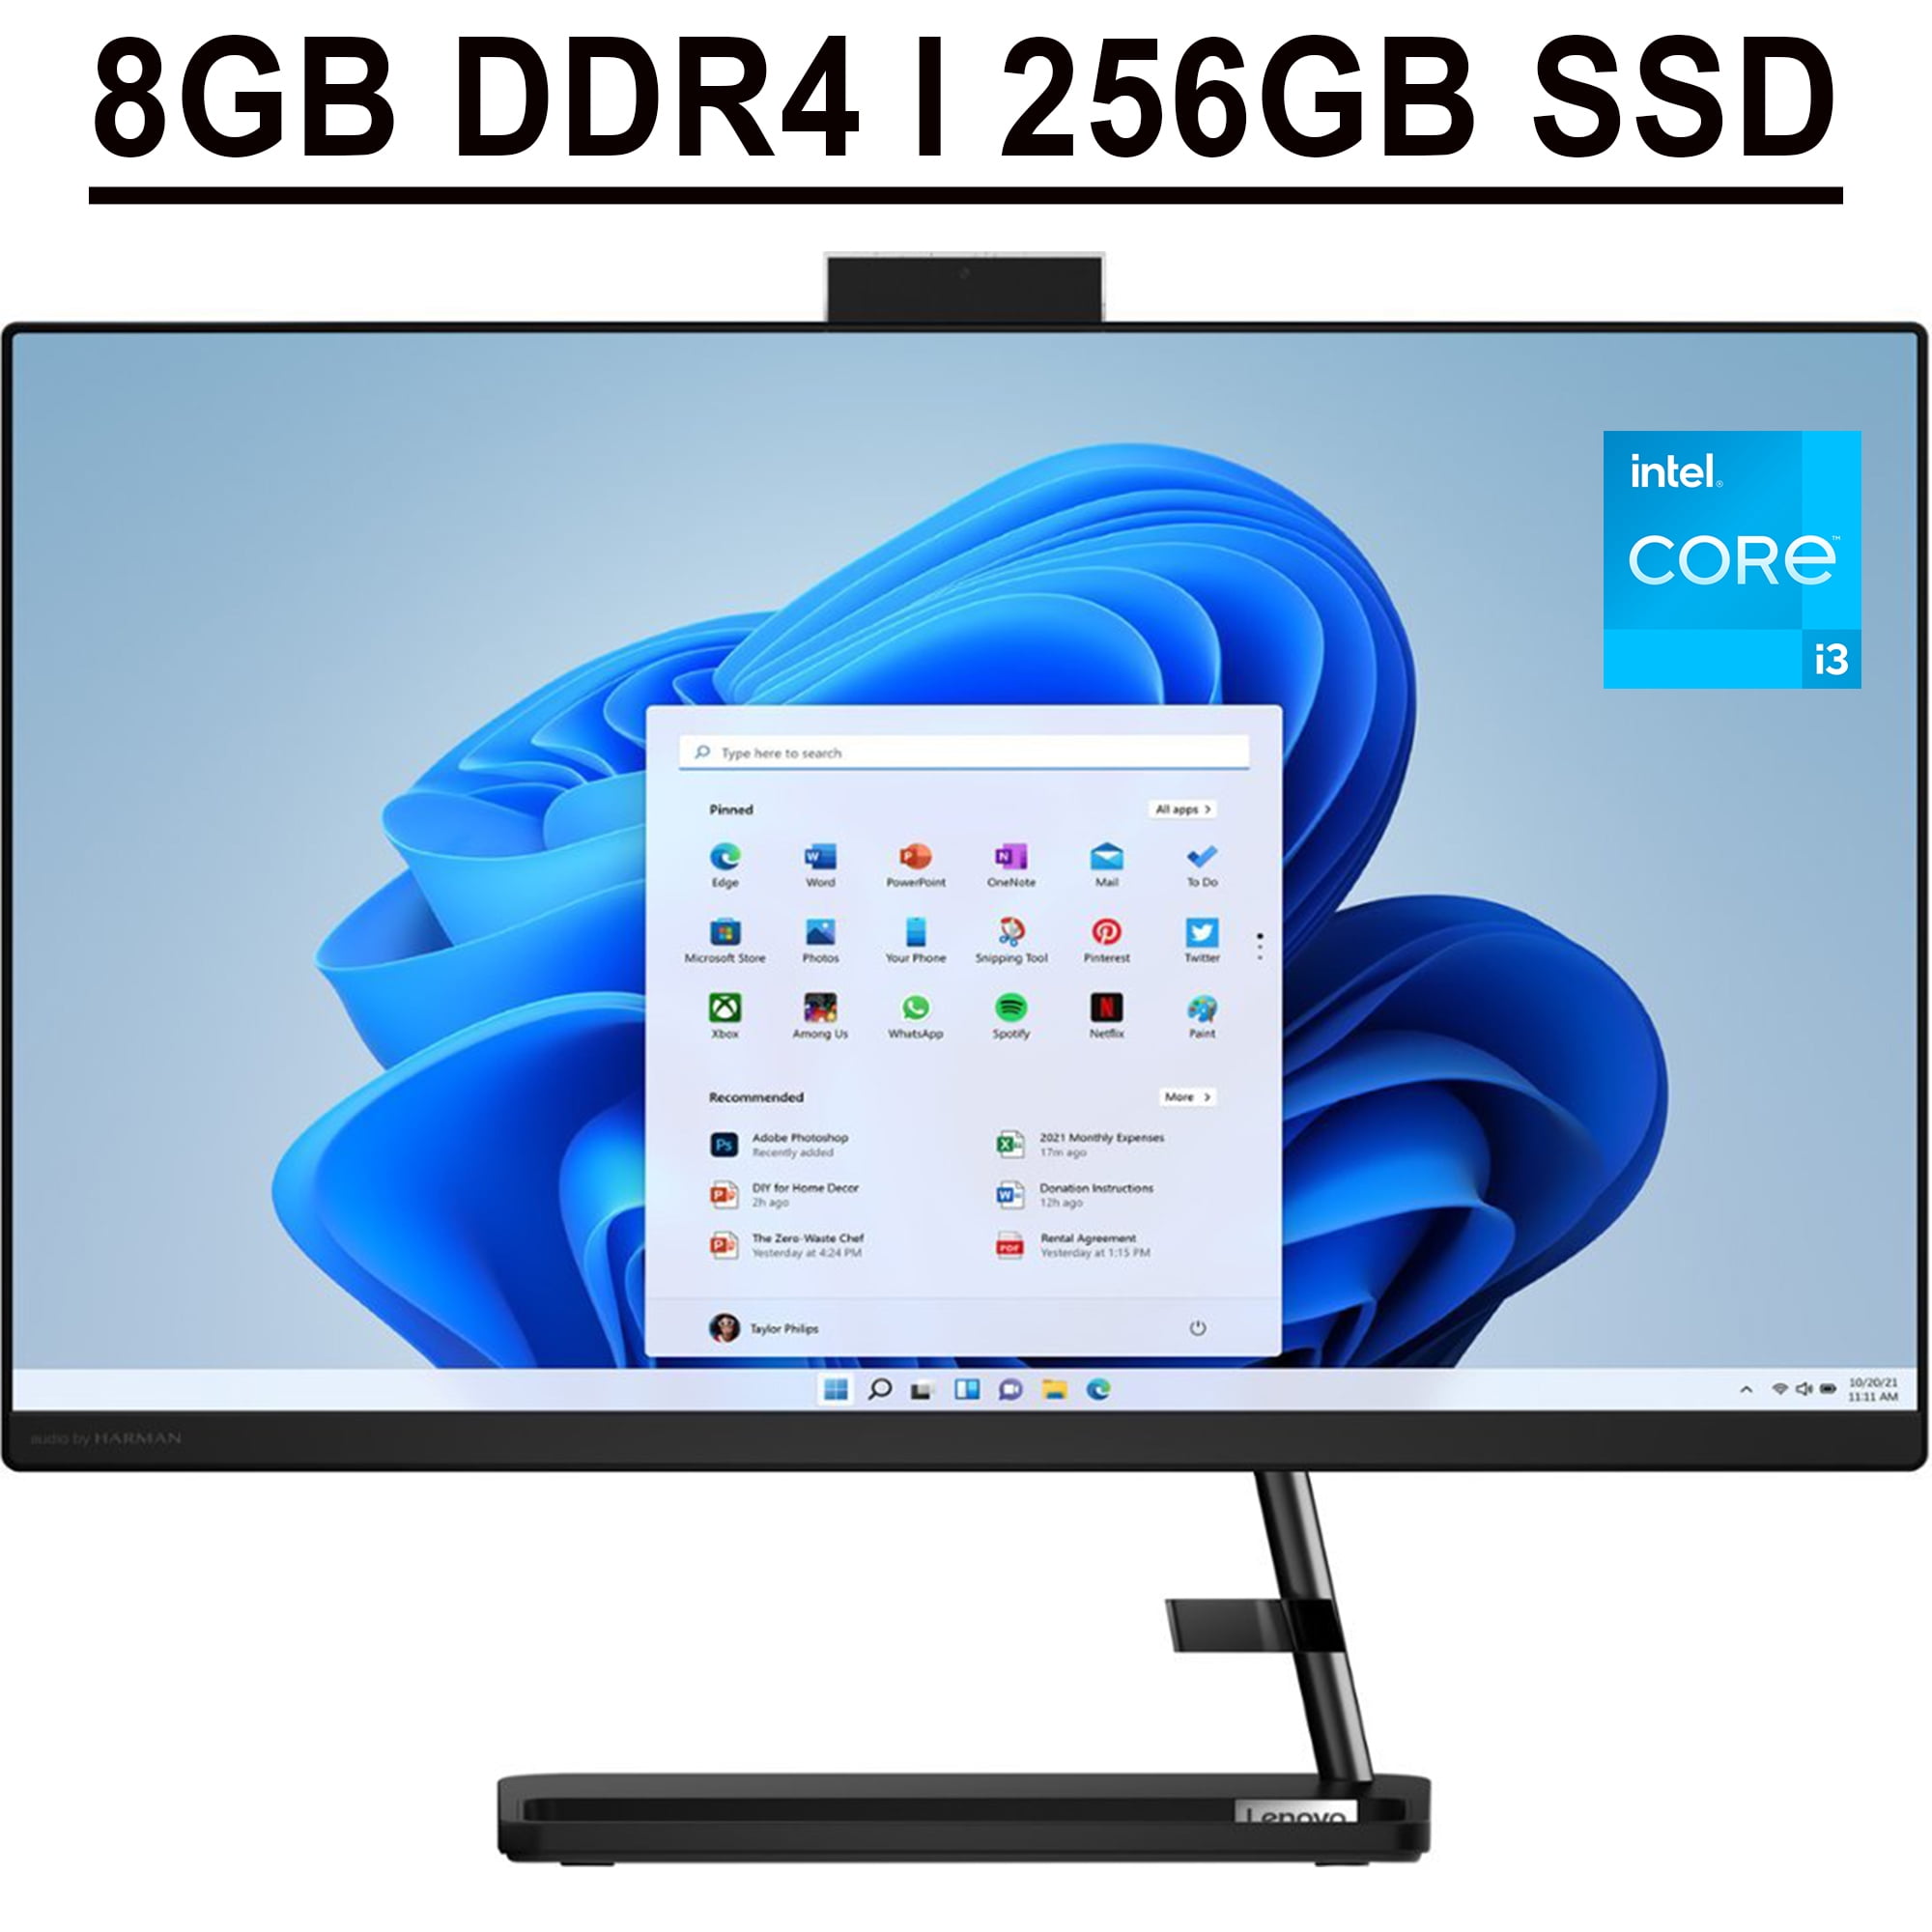 8GB All-in-One HDMI Core AIO DDR4 Desktop SSD Display IdeaCentre 512GB Gen 3i Kardon Lenovo Win11 i3-1115G4 Intel FHD 23.8\